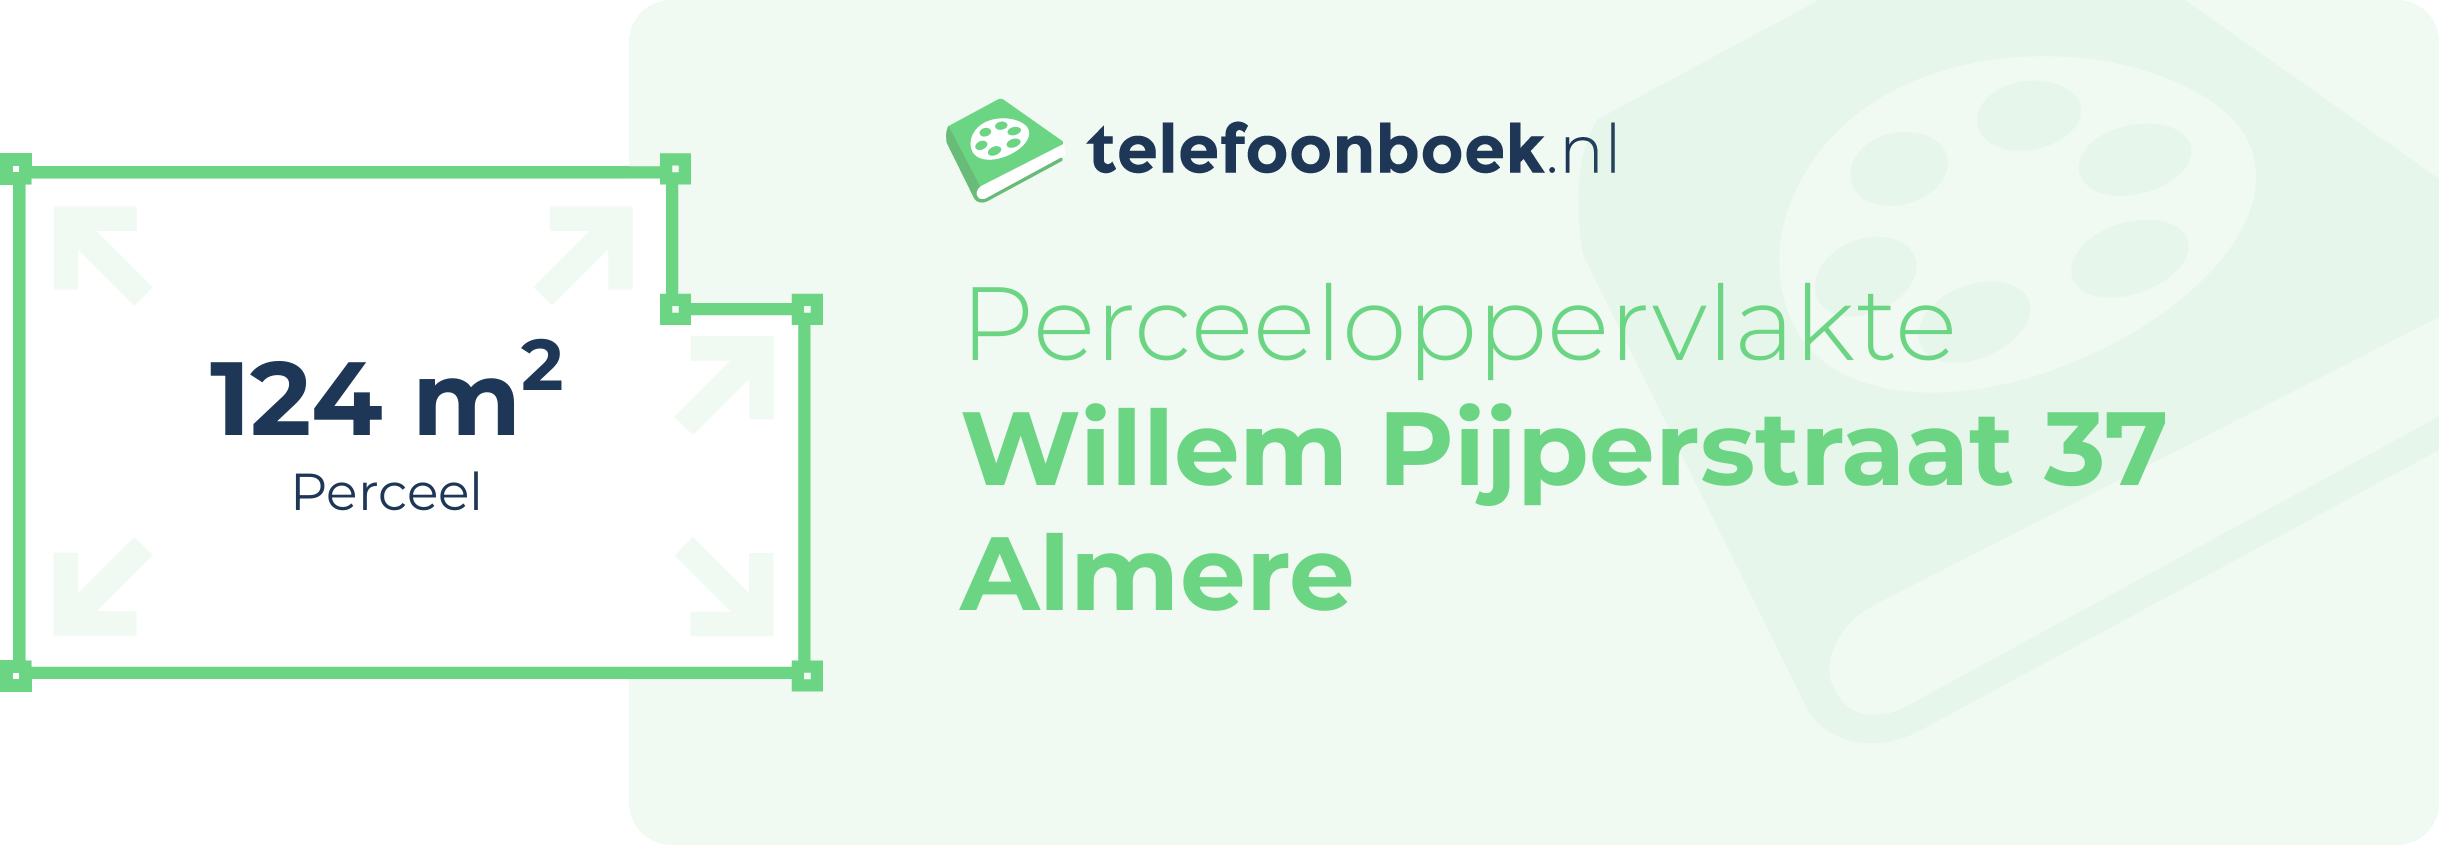 Perceeloppervlakte Willem Pijperstraat 37 Almere